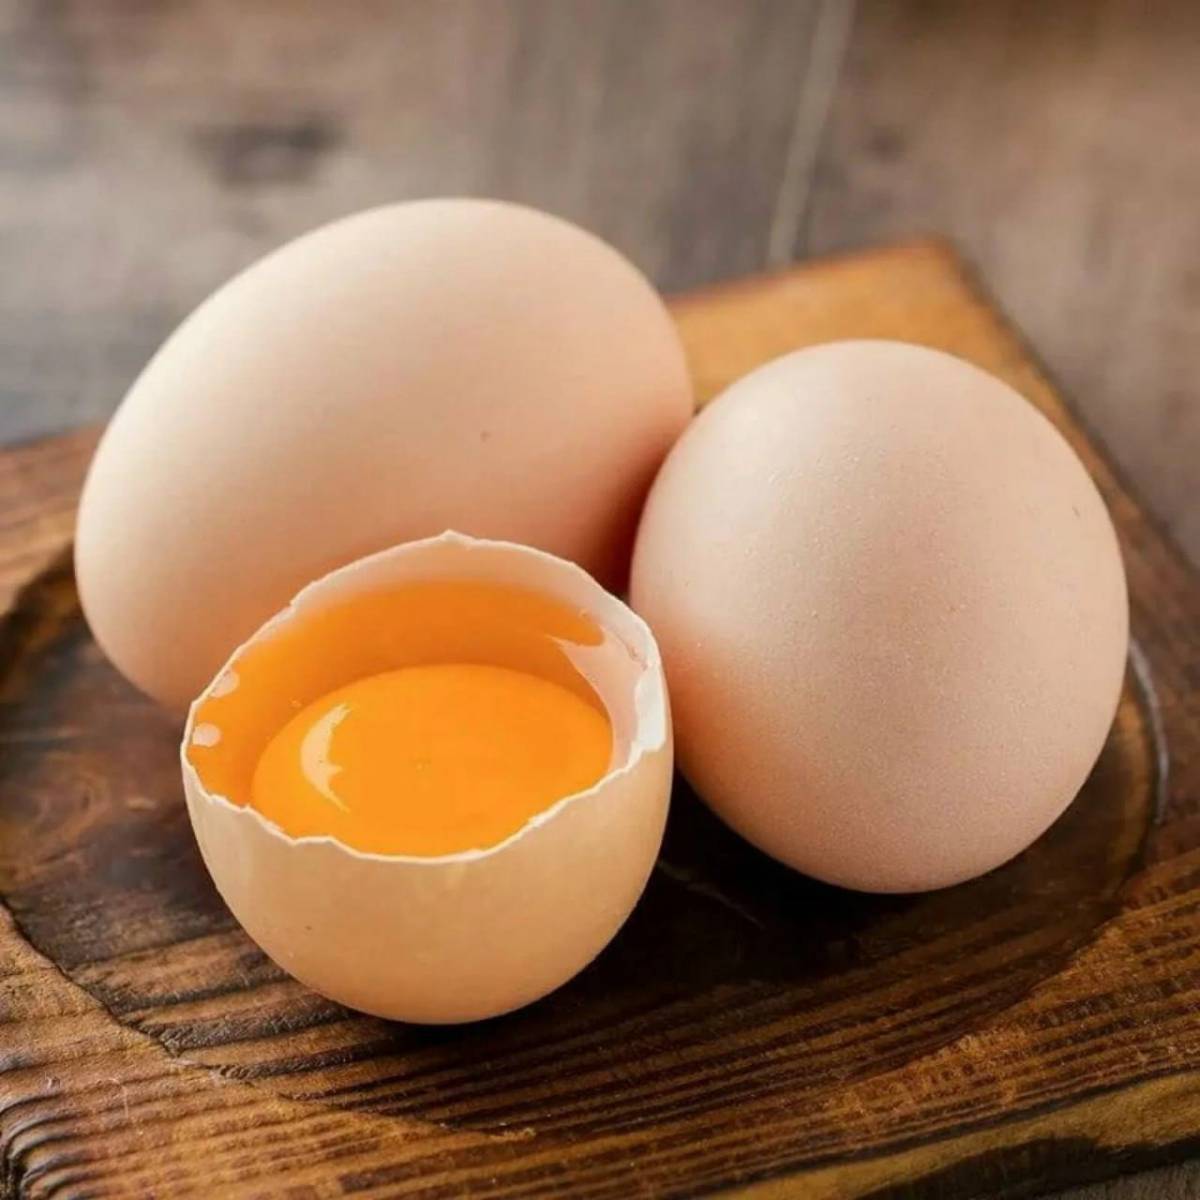 фотография яйца